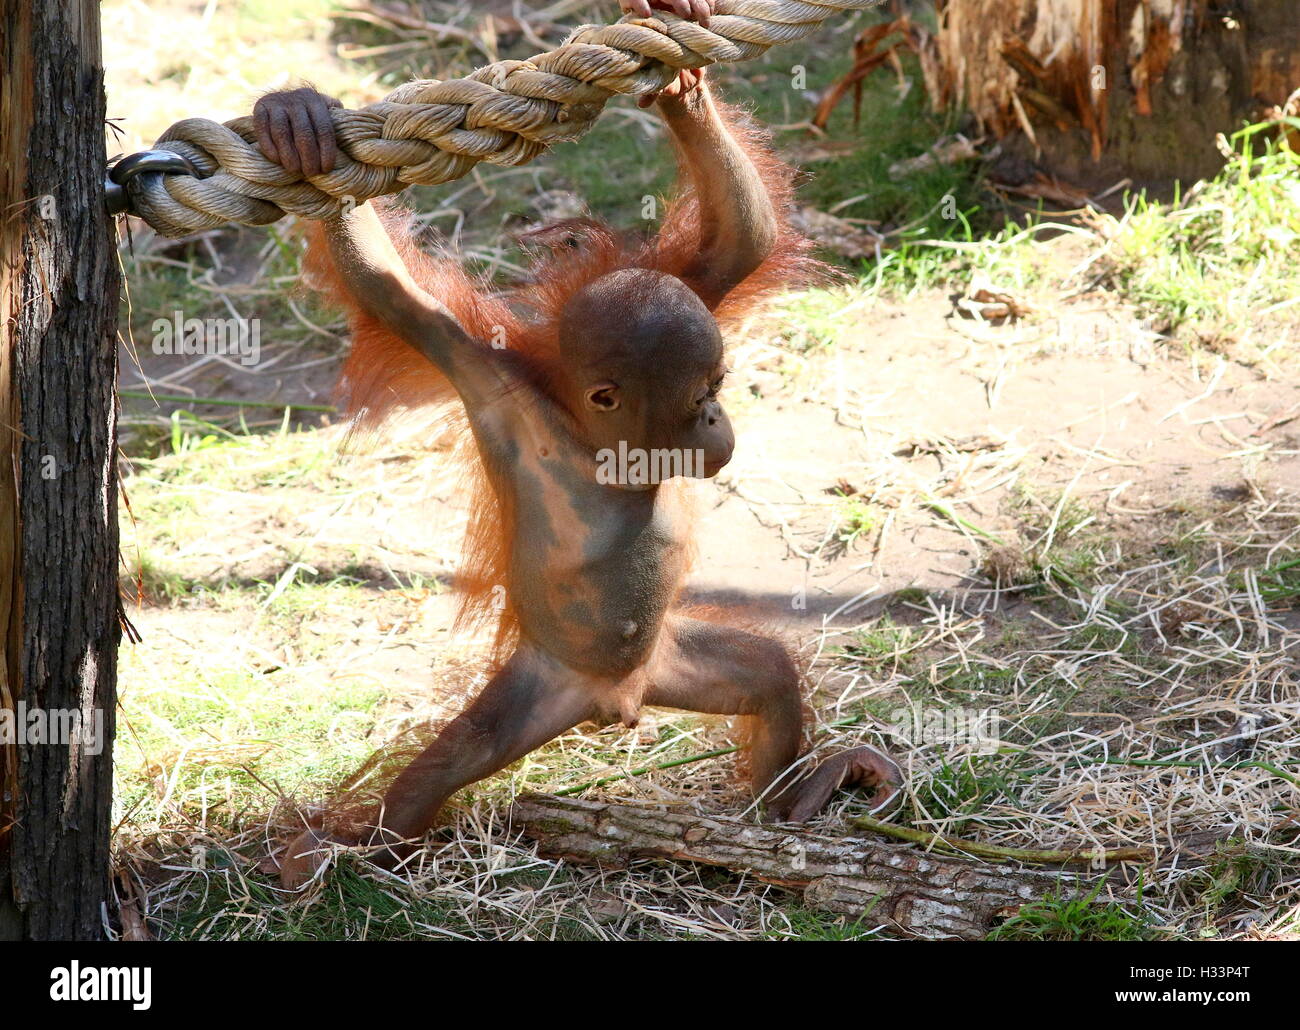 Bambino maschio Bornean orangutan (Pongo pygmaeus) apprendimento le funi a Apenheul primate zoo, Apeldoorn, Paesi Bassi Foto Stock